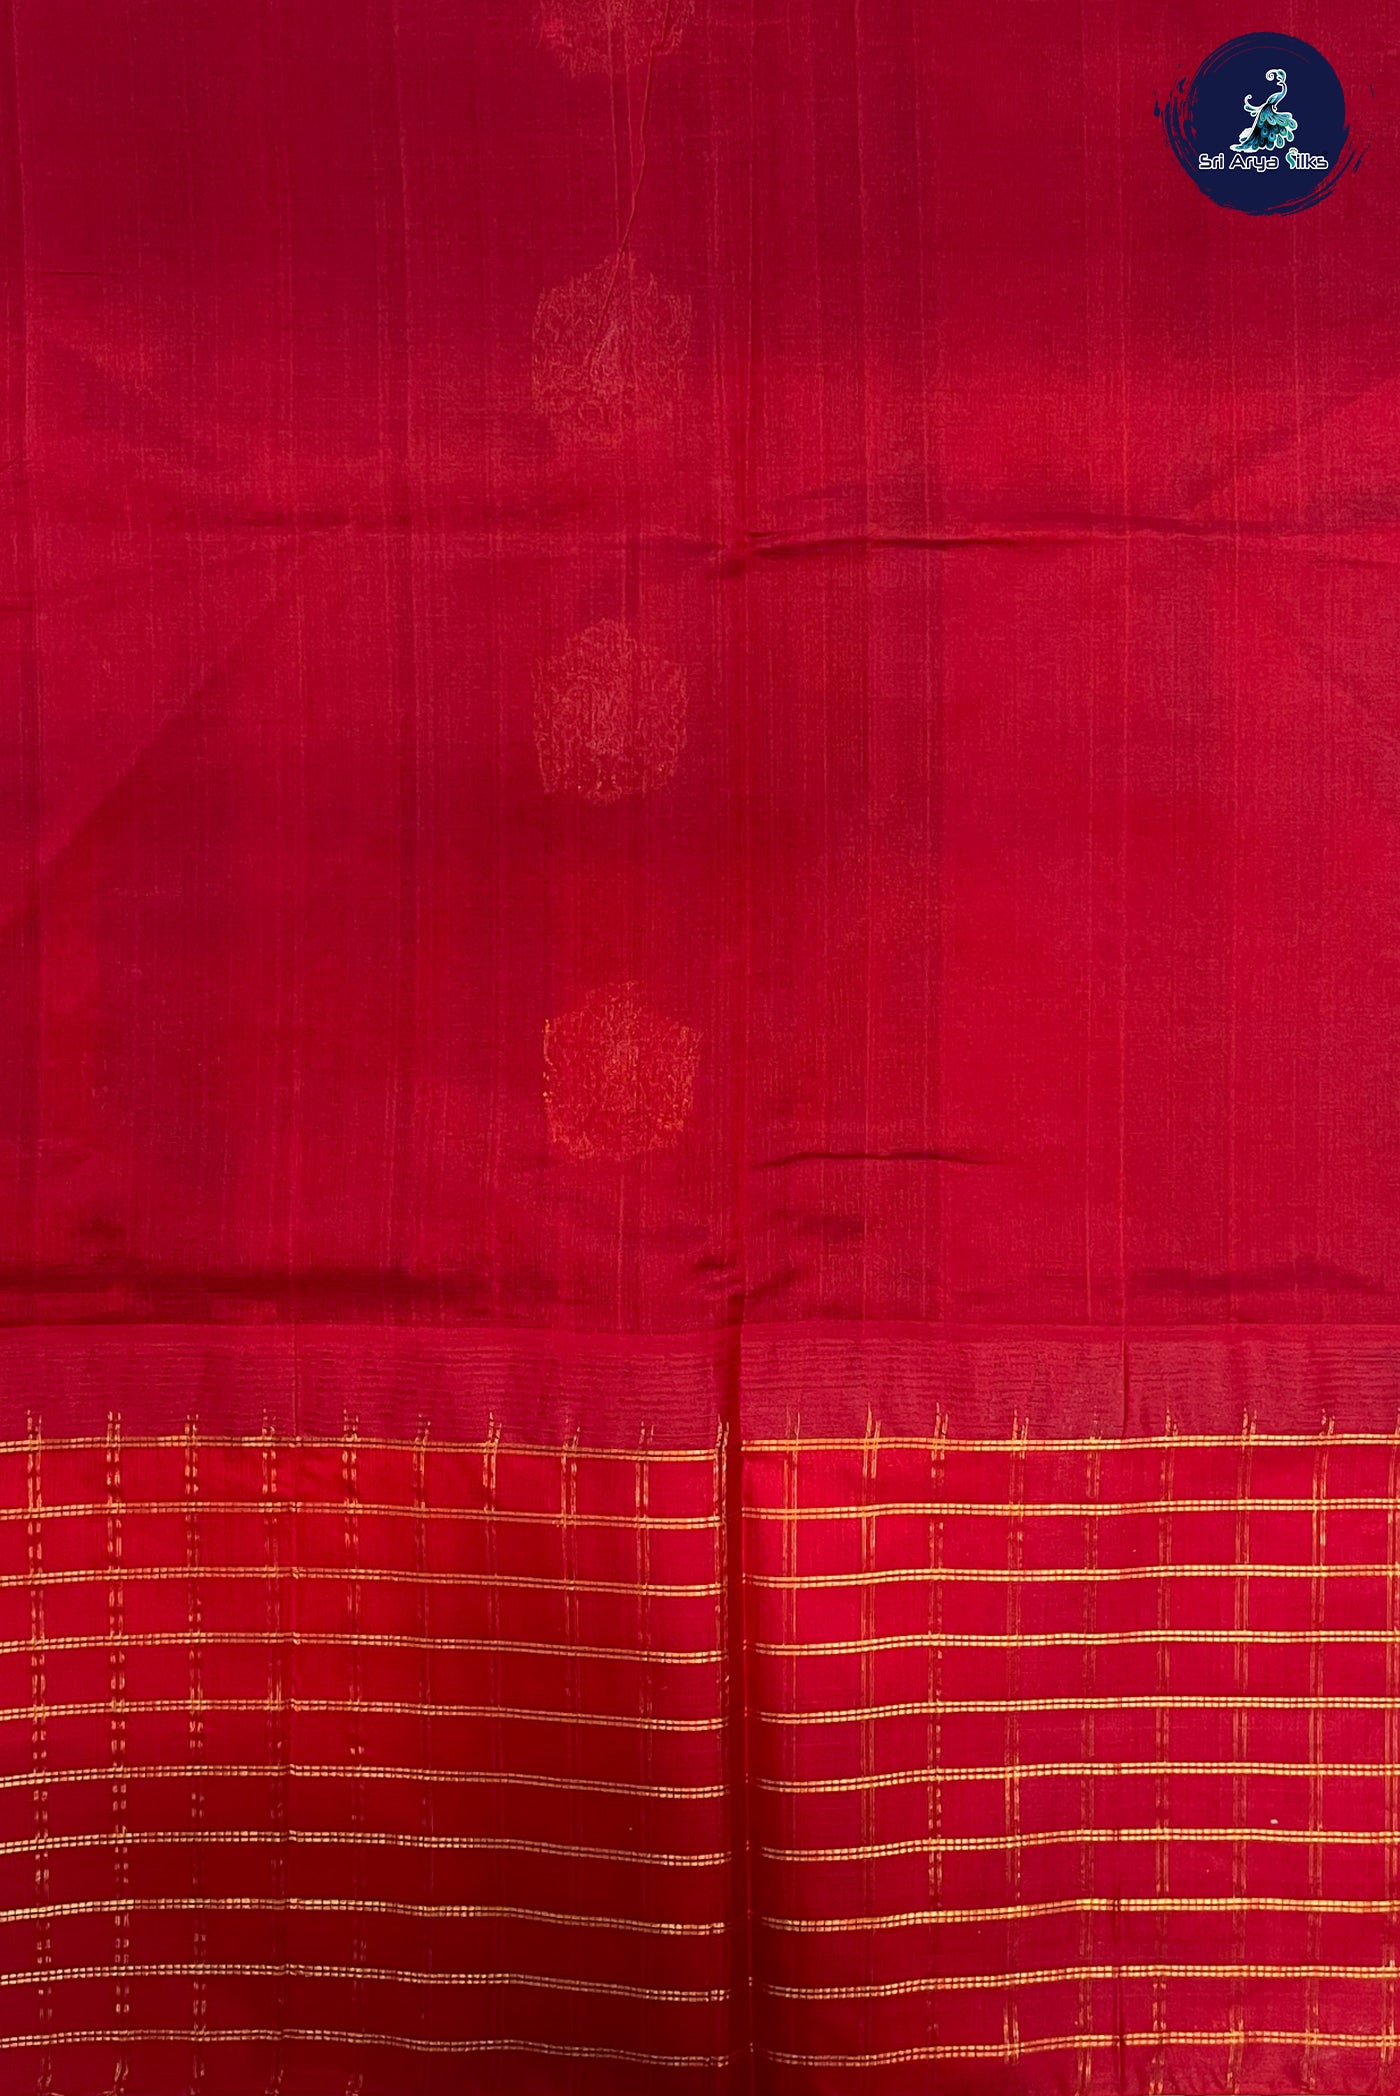 Brown Korvai Silk Cotton Saree With Zari Buttas Pattern